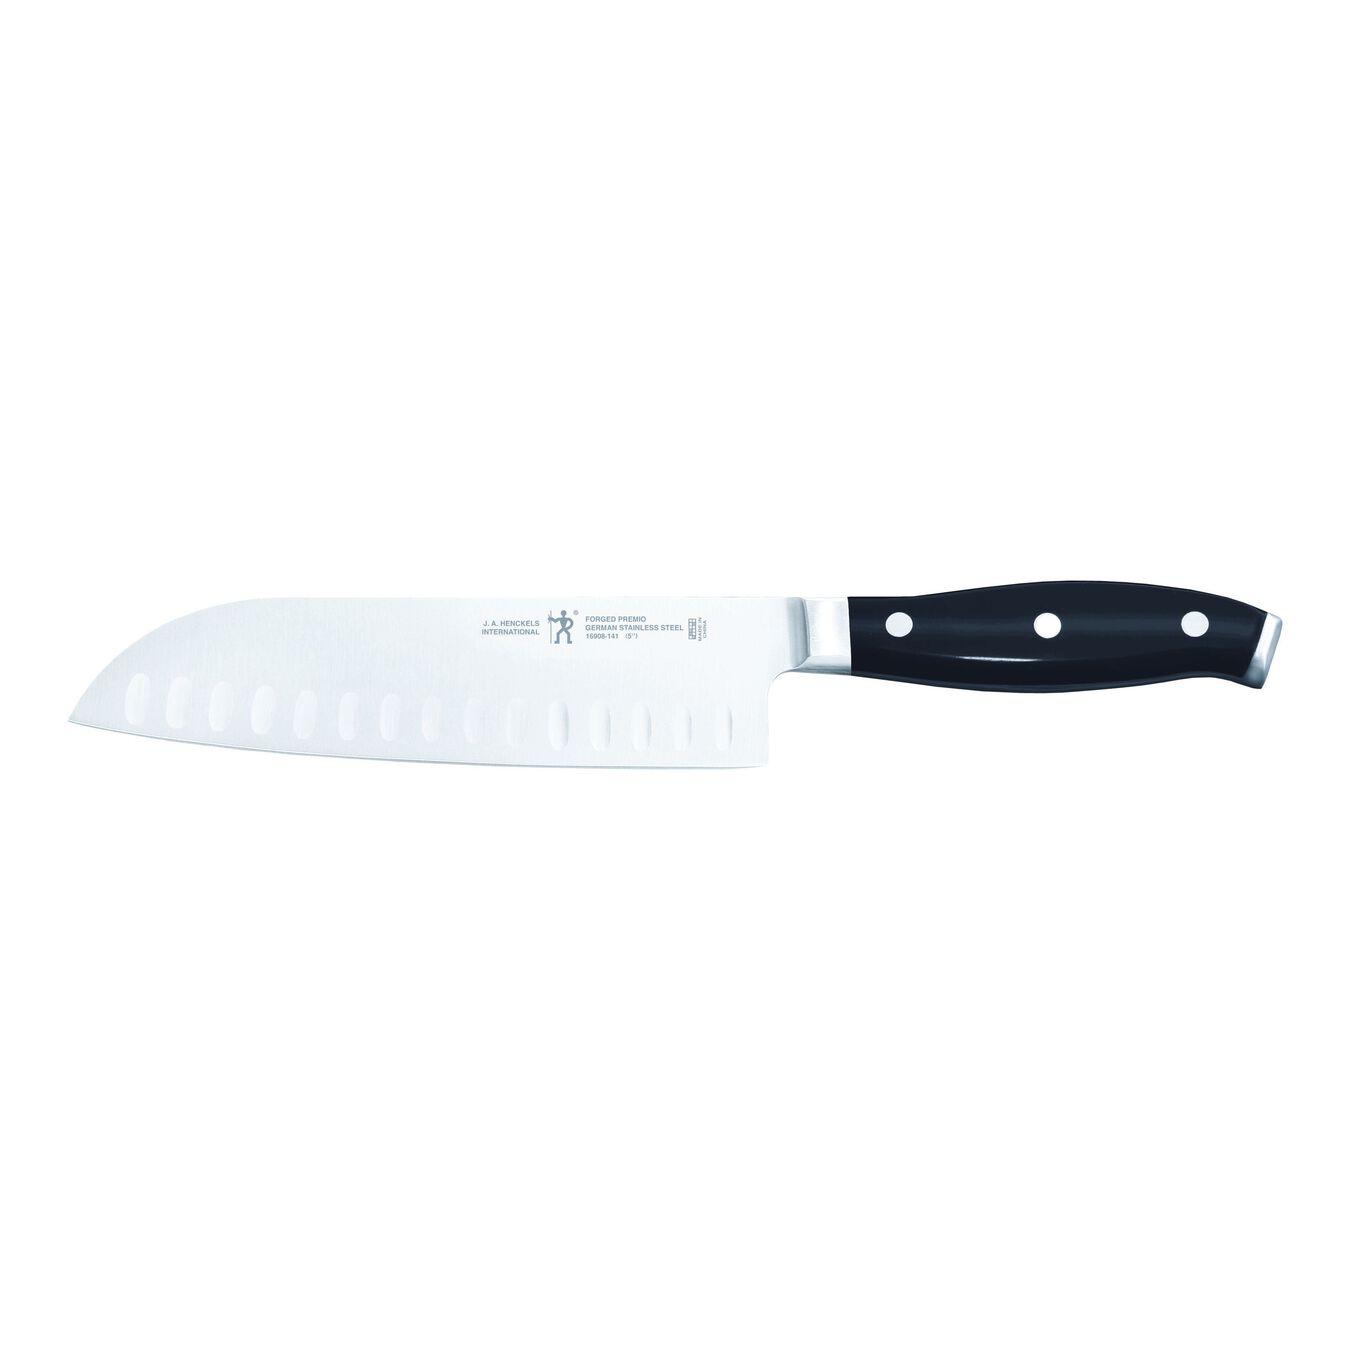 5-inch, Hollow Edge Santoku Knife,,large 1